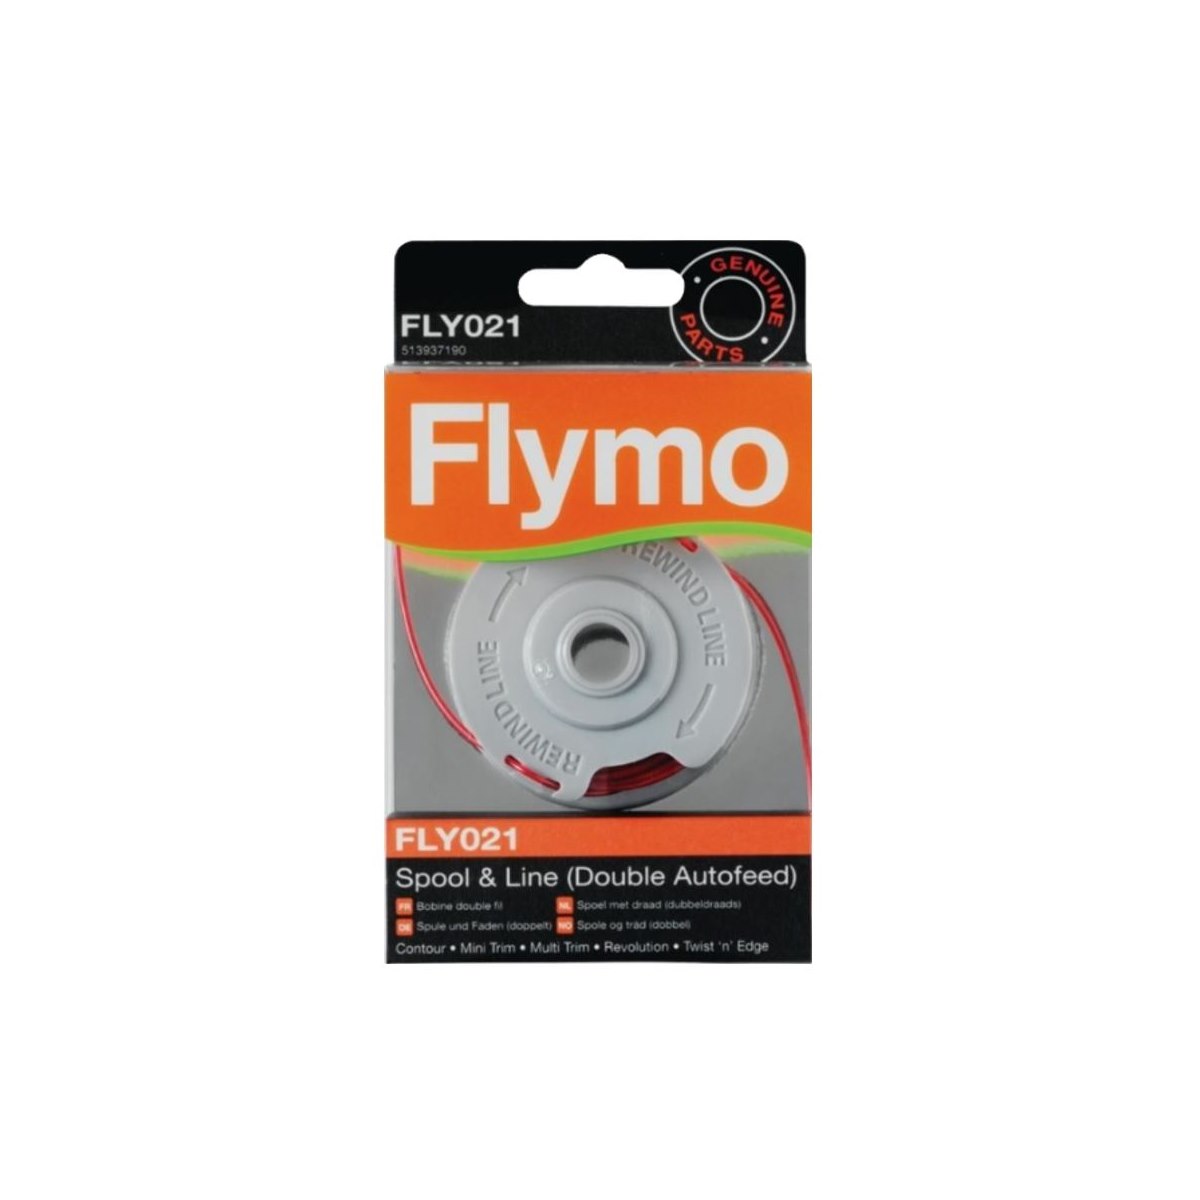 FLYMO 021 Spool and Line